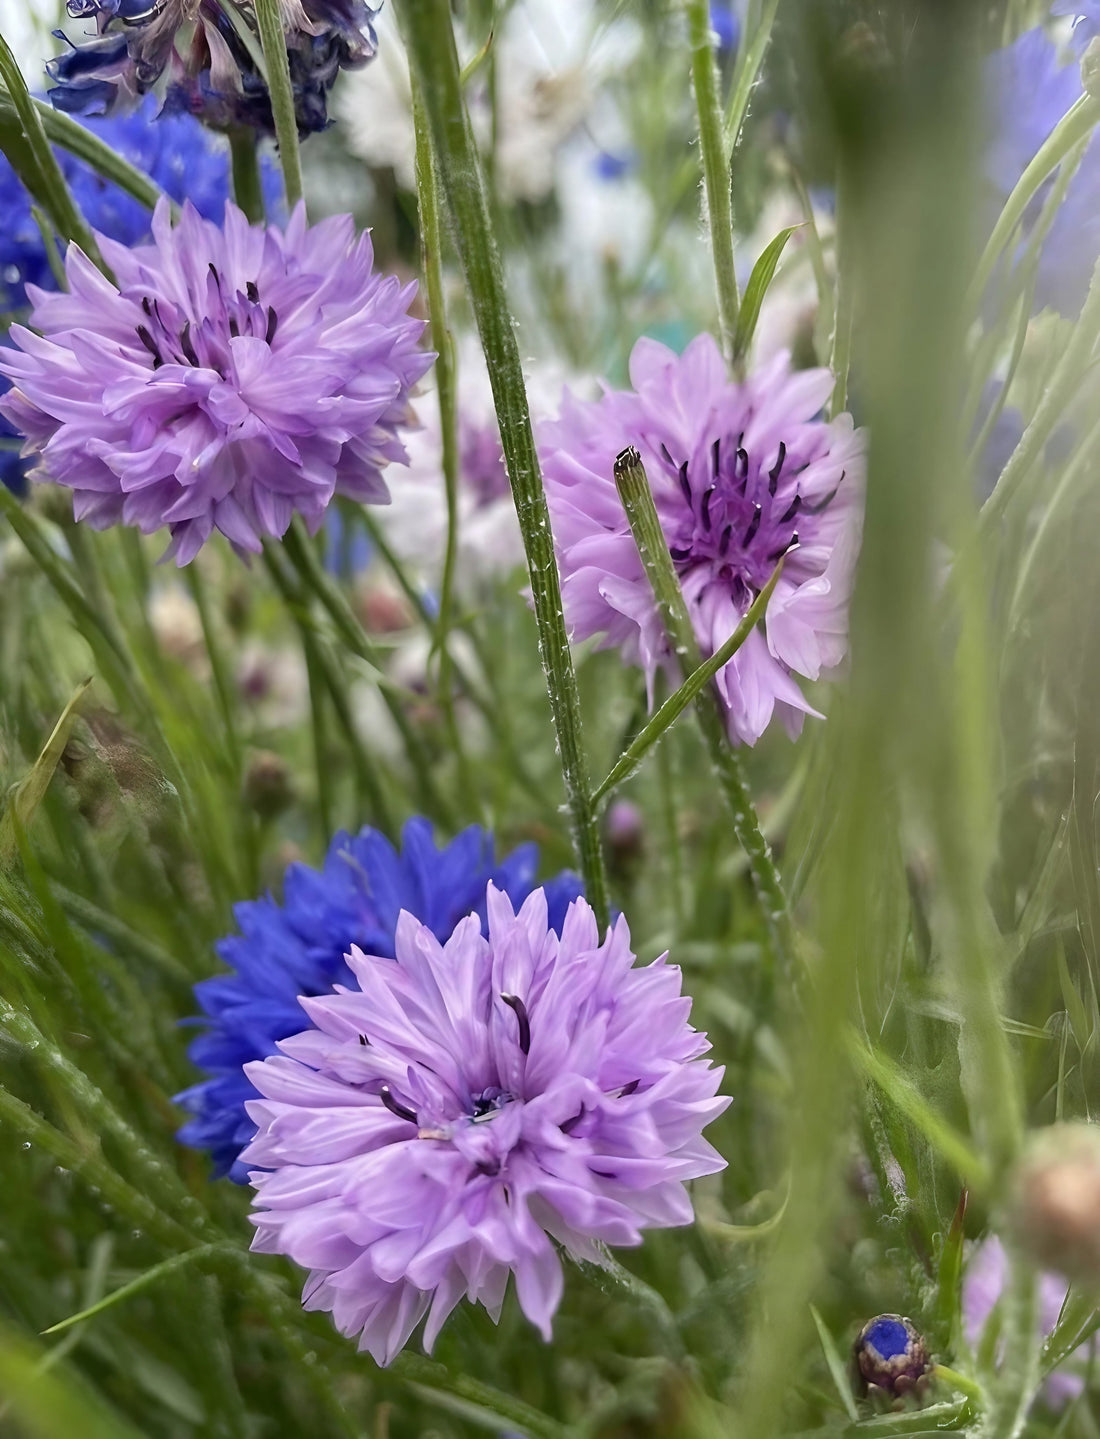 Cornflower Mauve Boy plant with vibrant purple and blue blooms